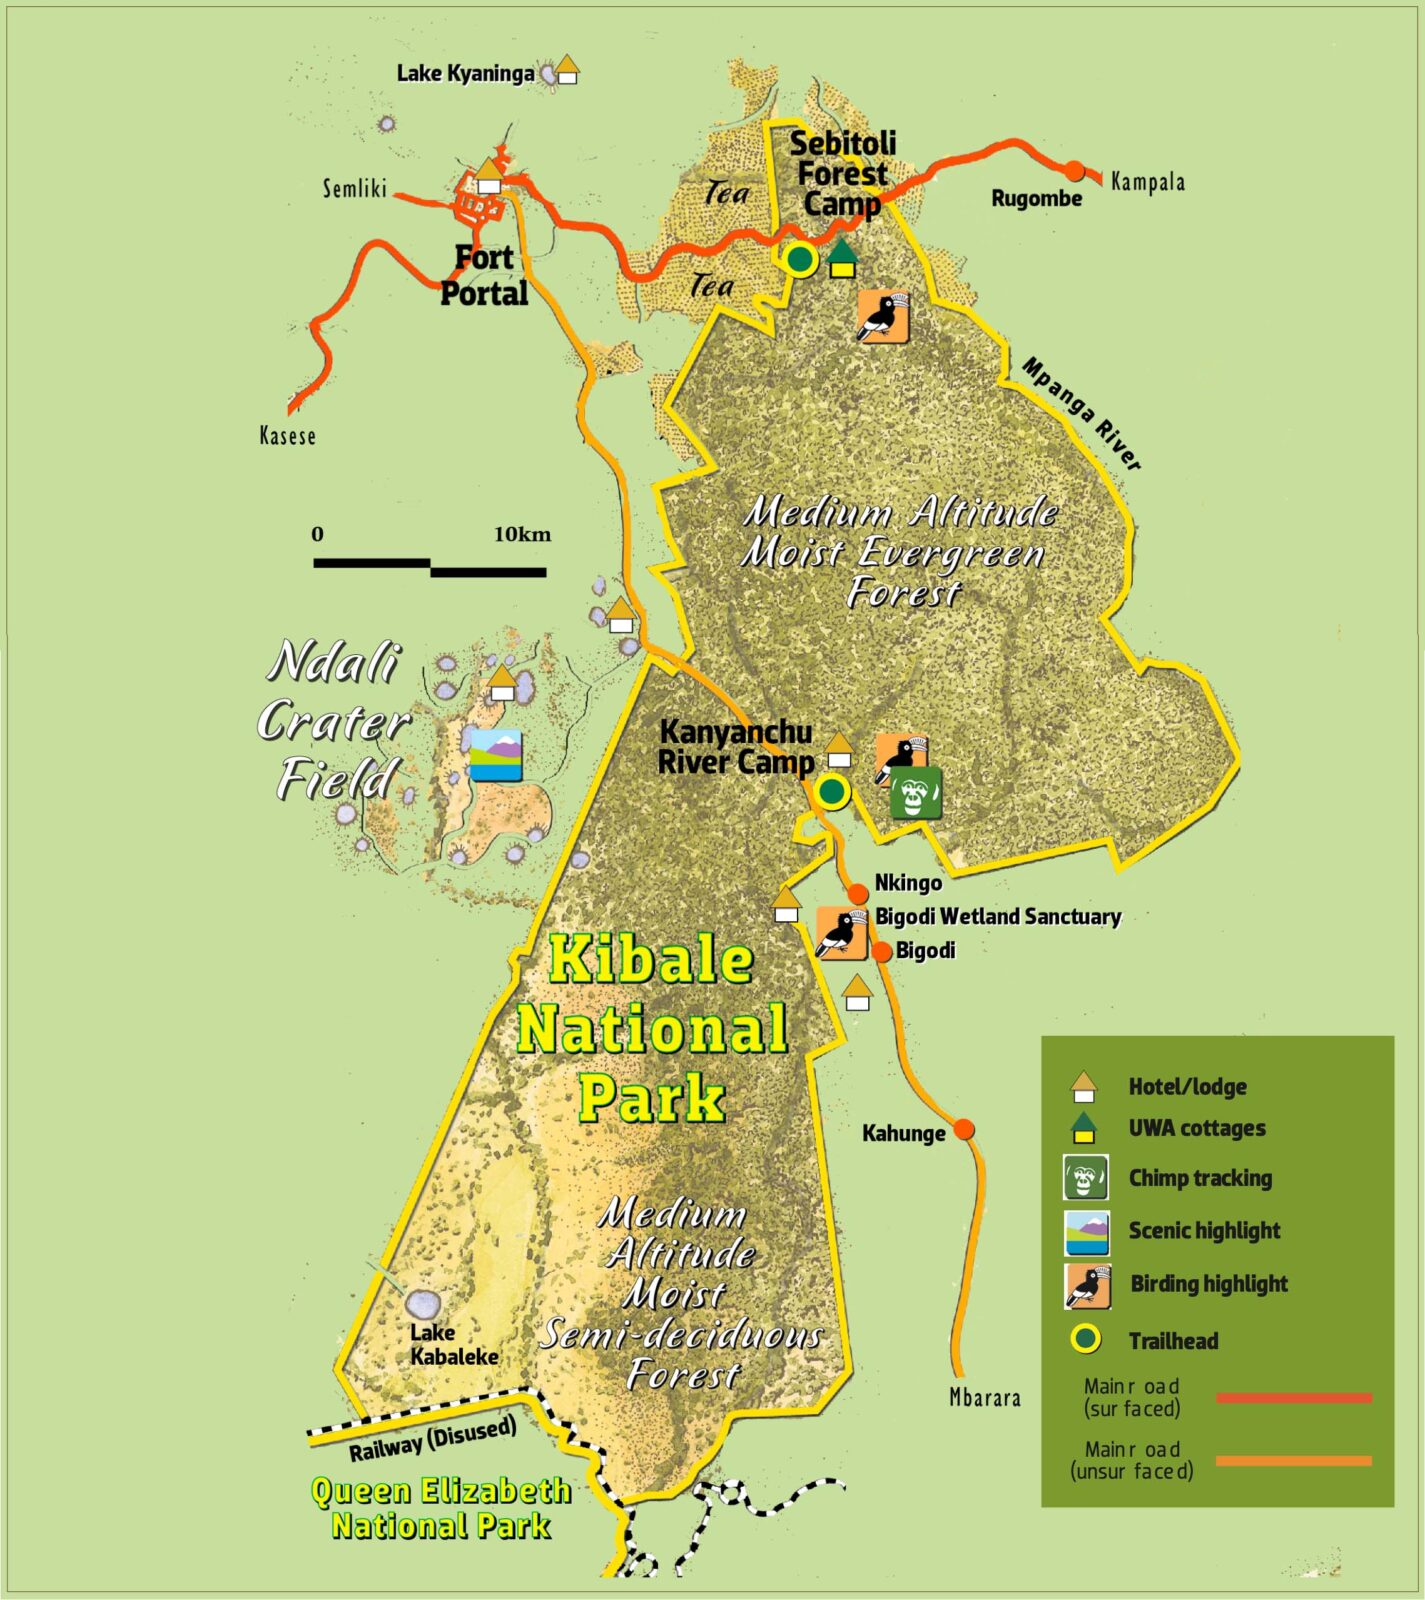 Kibale National Park Map by UWA